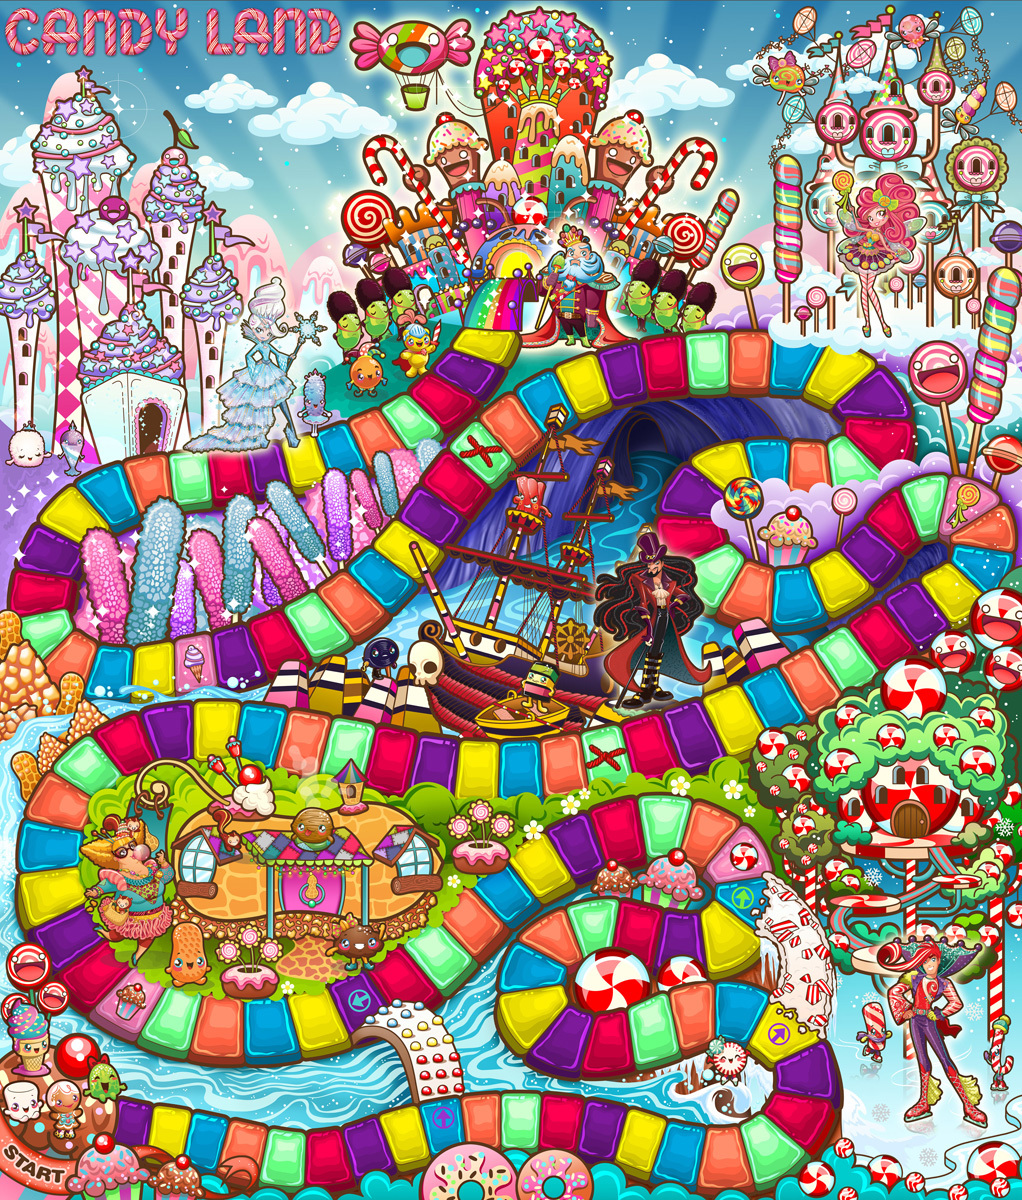 [2013 Candy Land board]